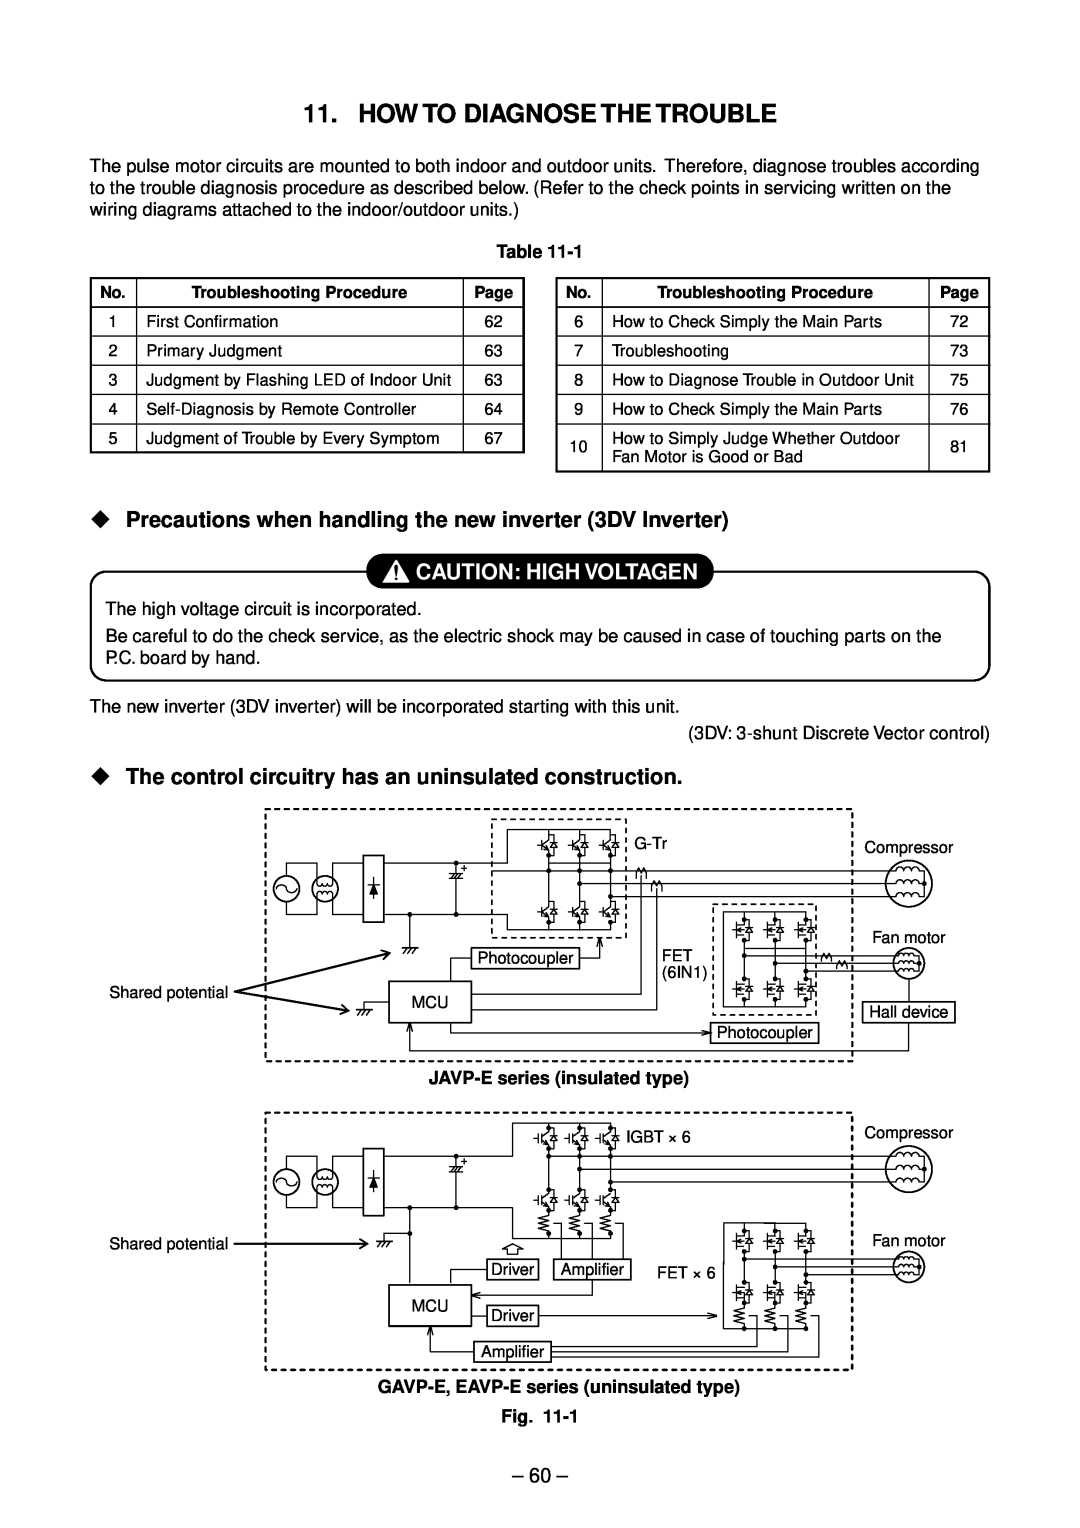 Toshiba RAS-B16GKVP-E, RAS-13GAVP-E How To Diagnose The Trouble, K Precautions when handling the new inverter 3DV Inverter 